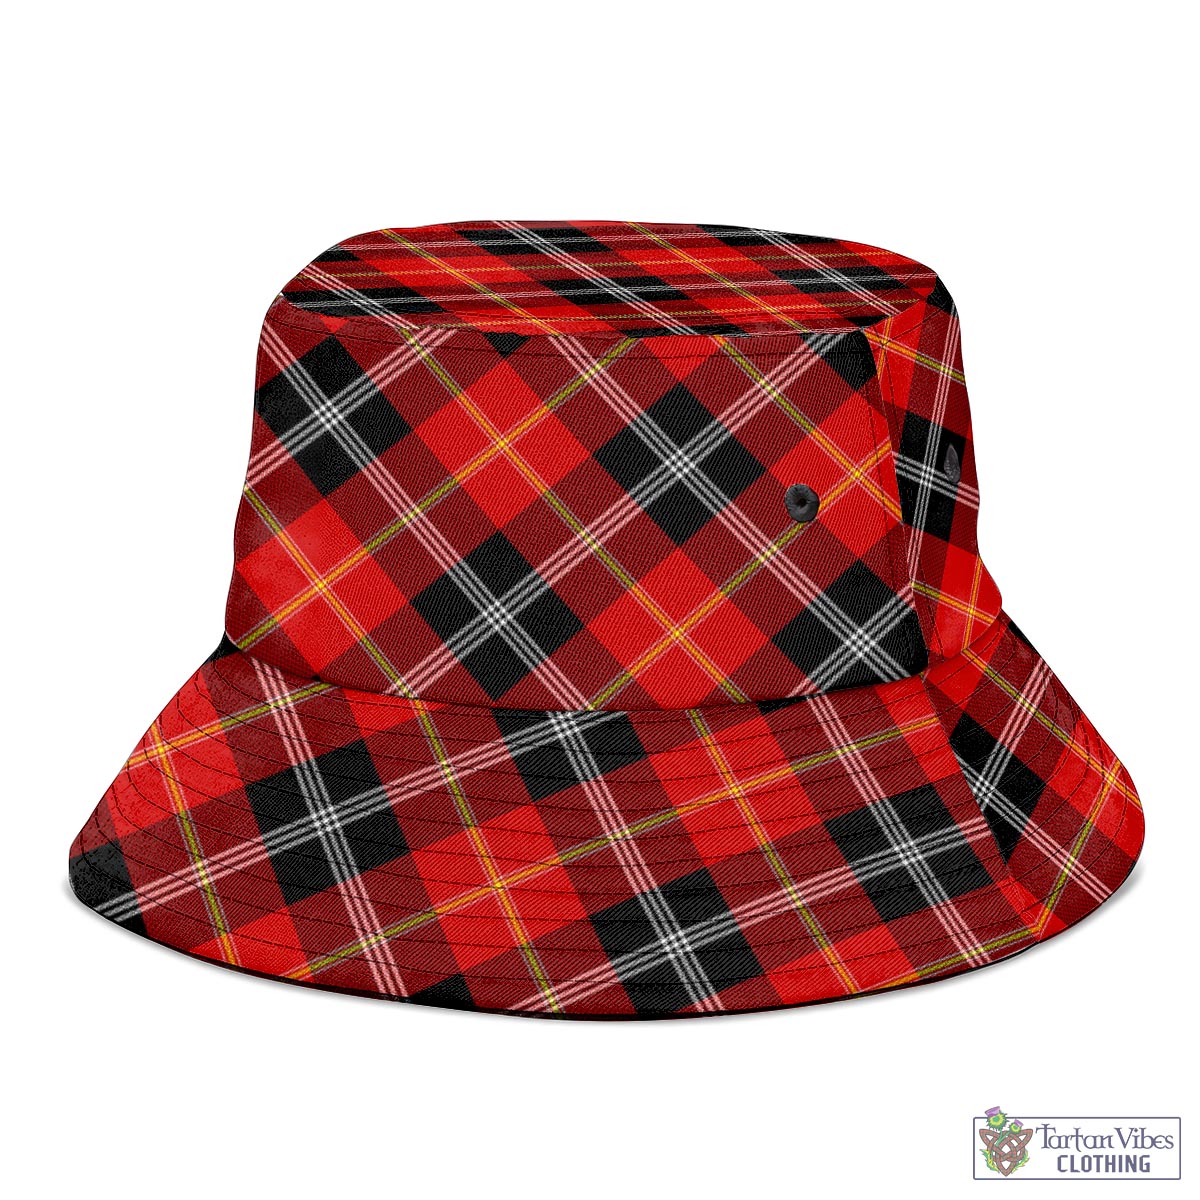 Tartan Vibes Clothing Majoribanks Tartan Bucket Hat